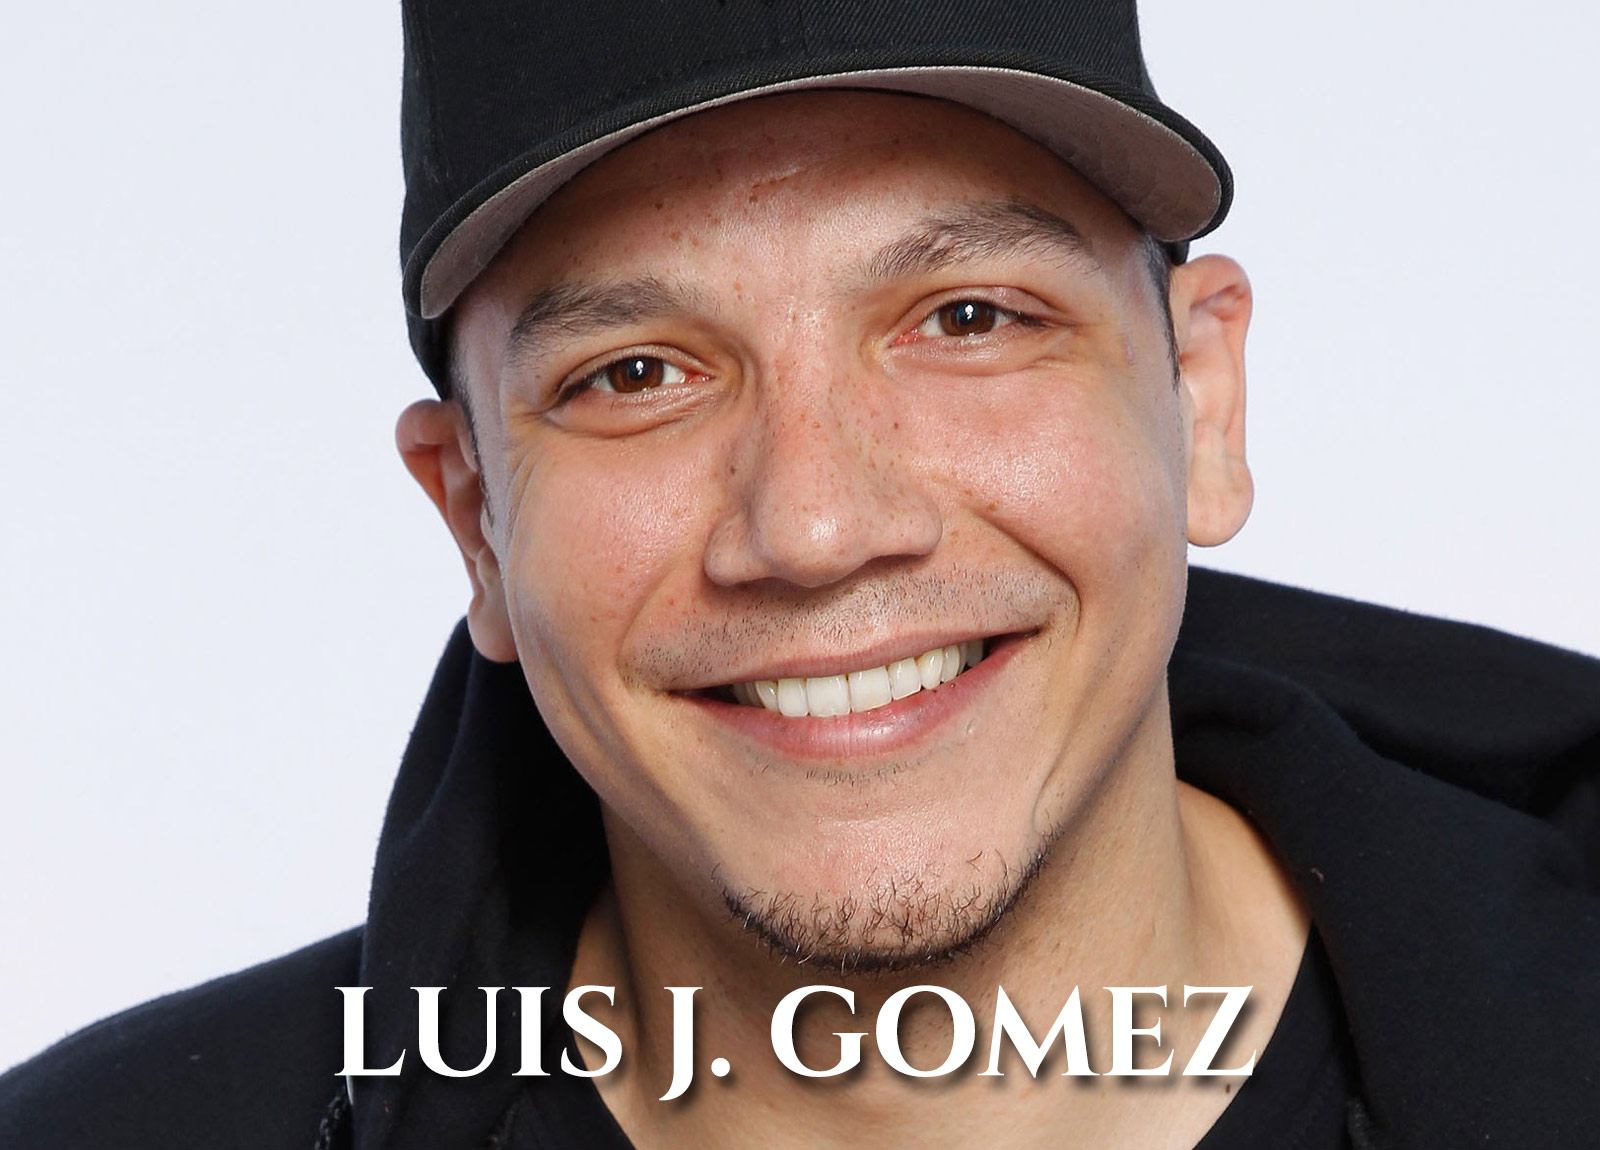 Luis J. Gomez